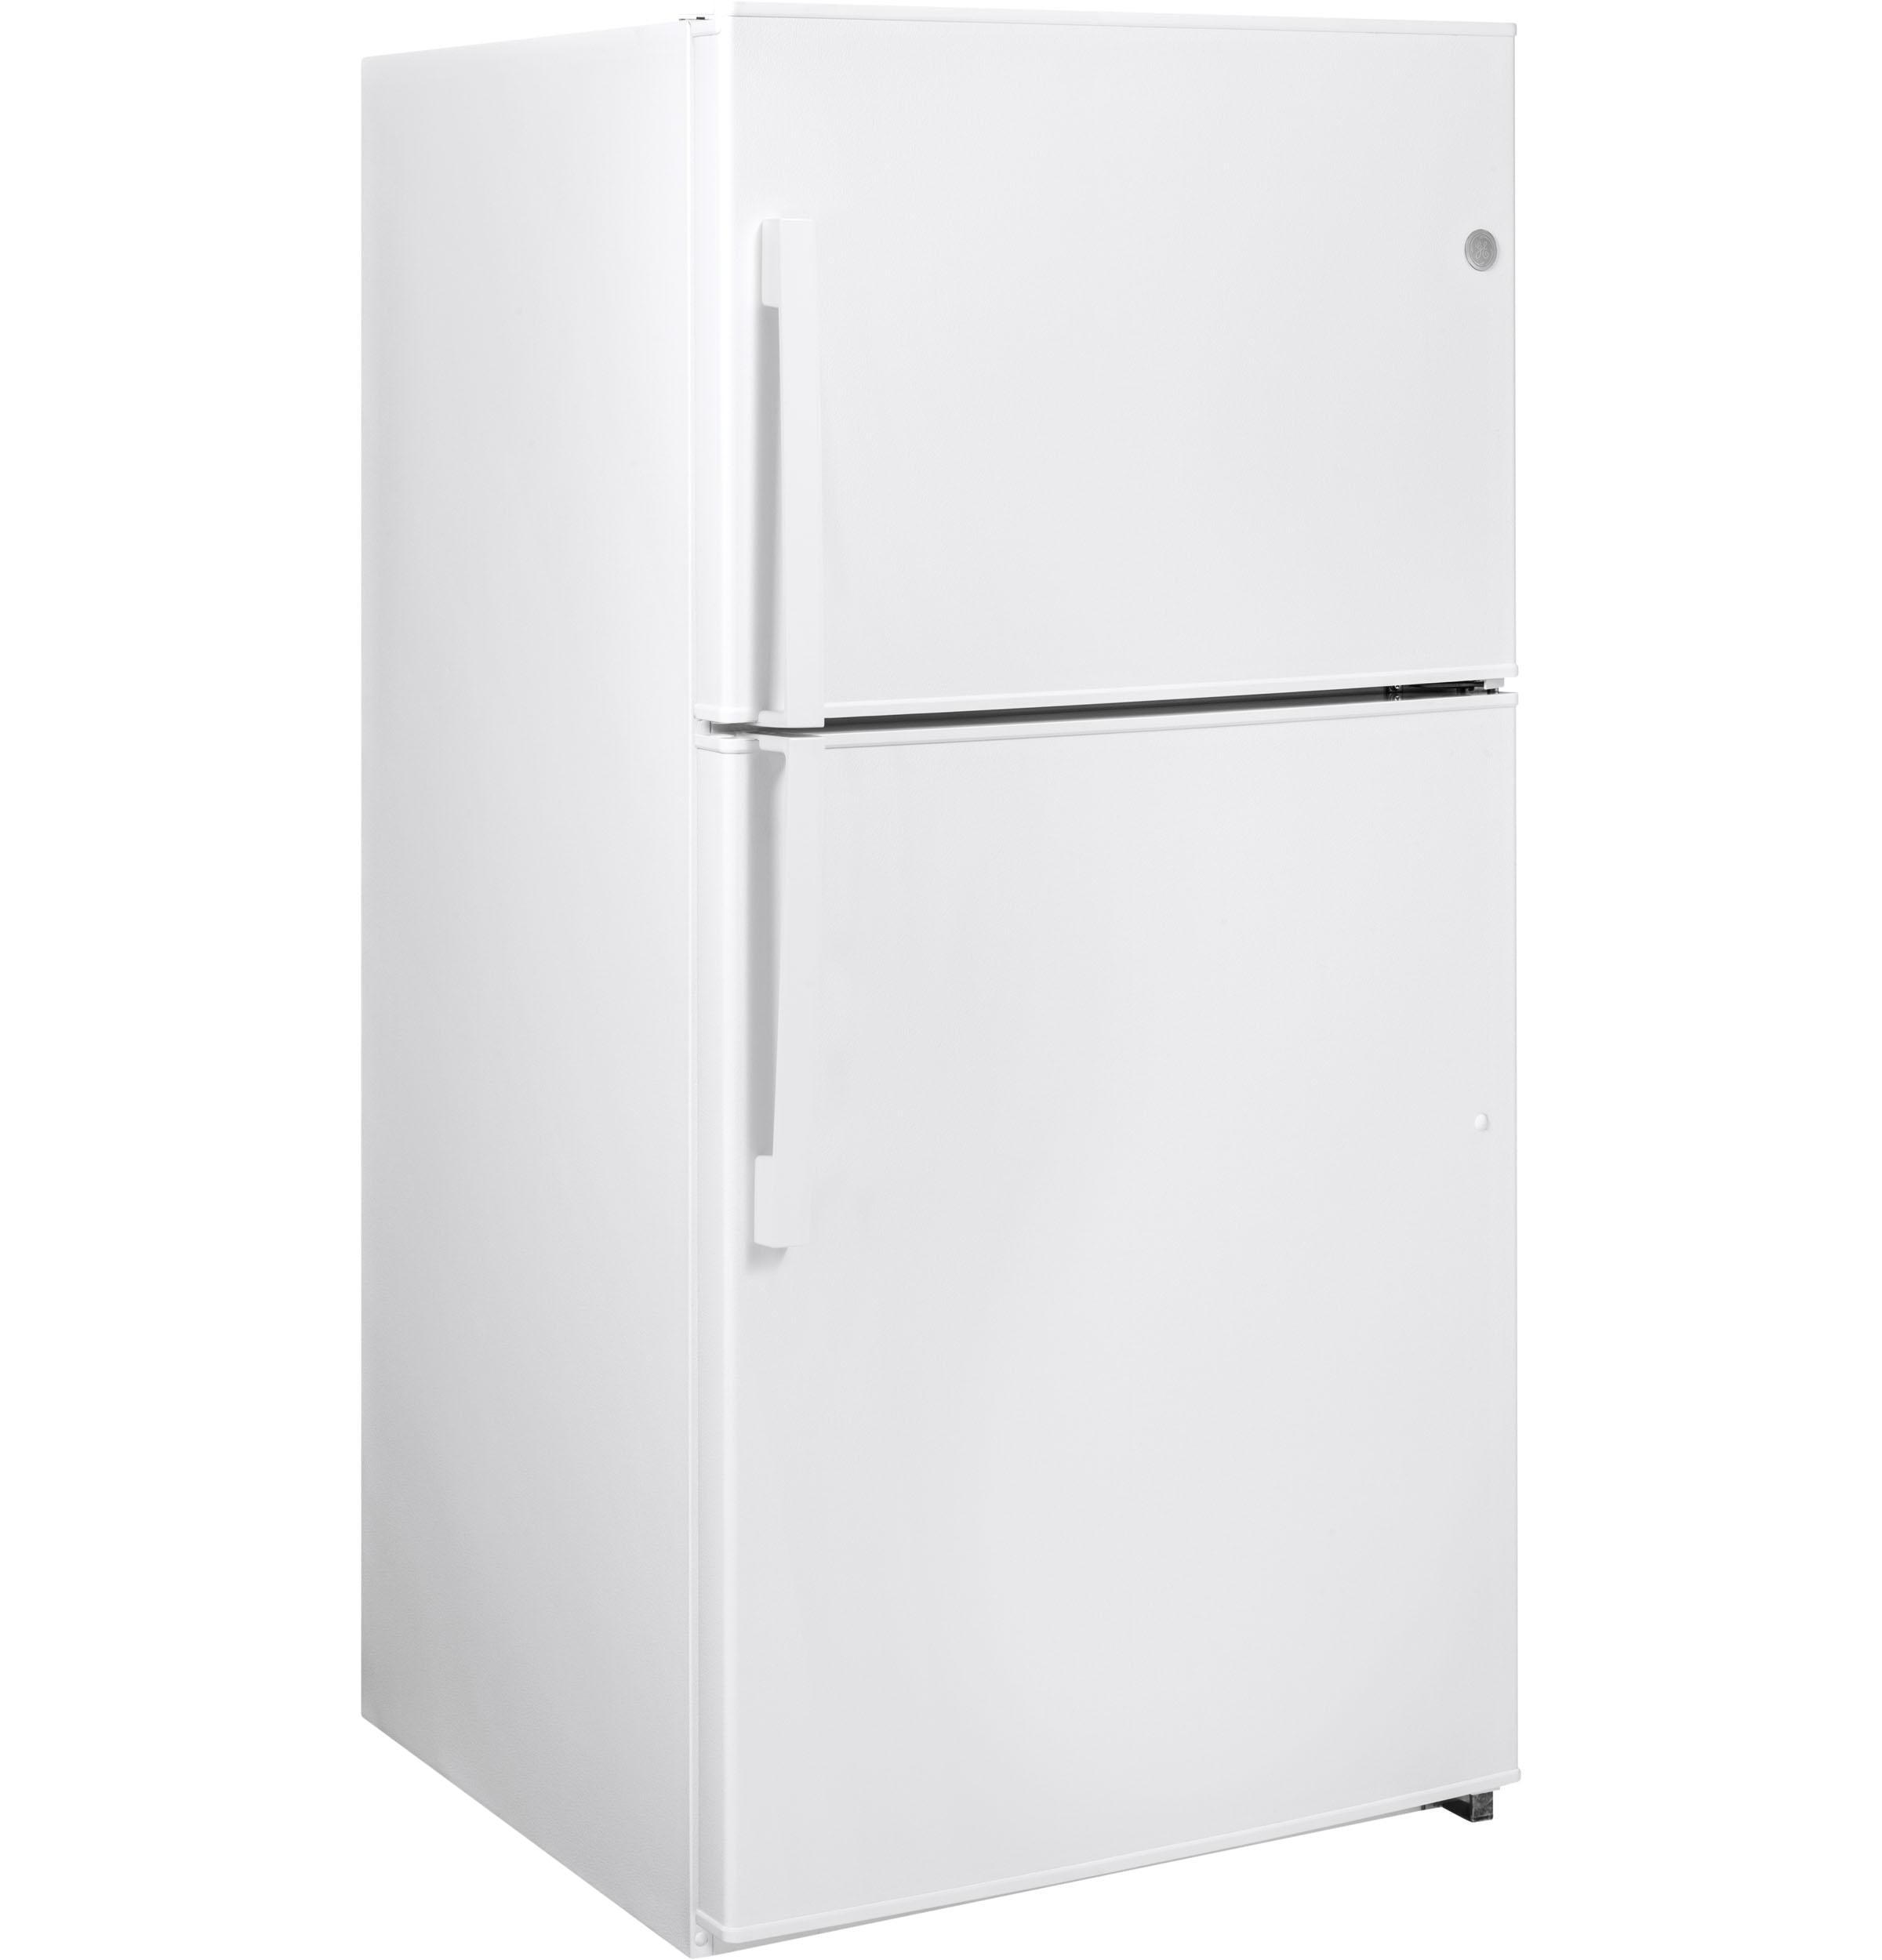 GE® ENERGY STAR® 21.1 Cu. Ft. Top-Freezer Refrigerator